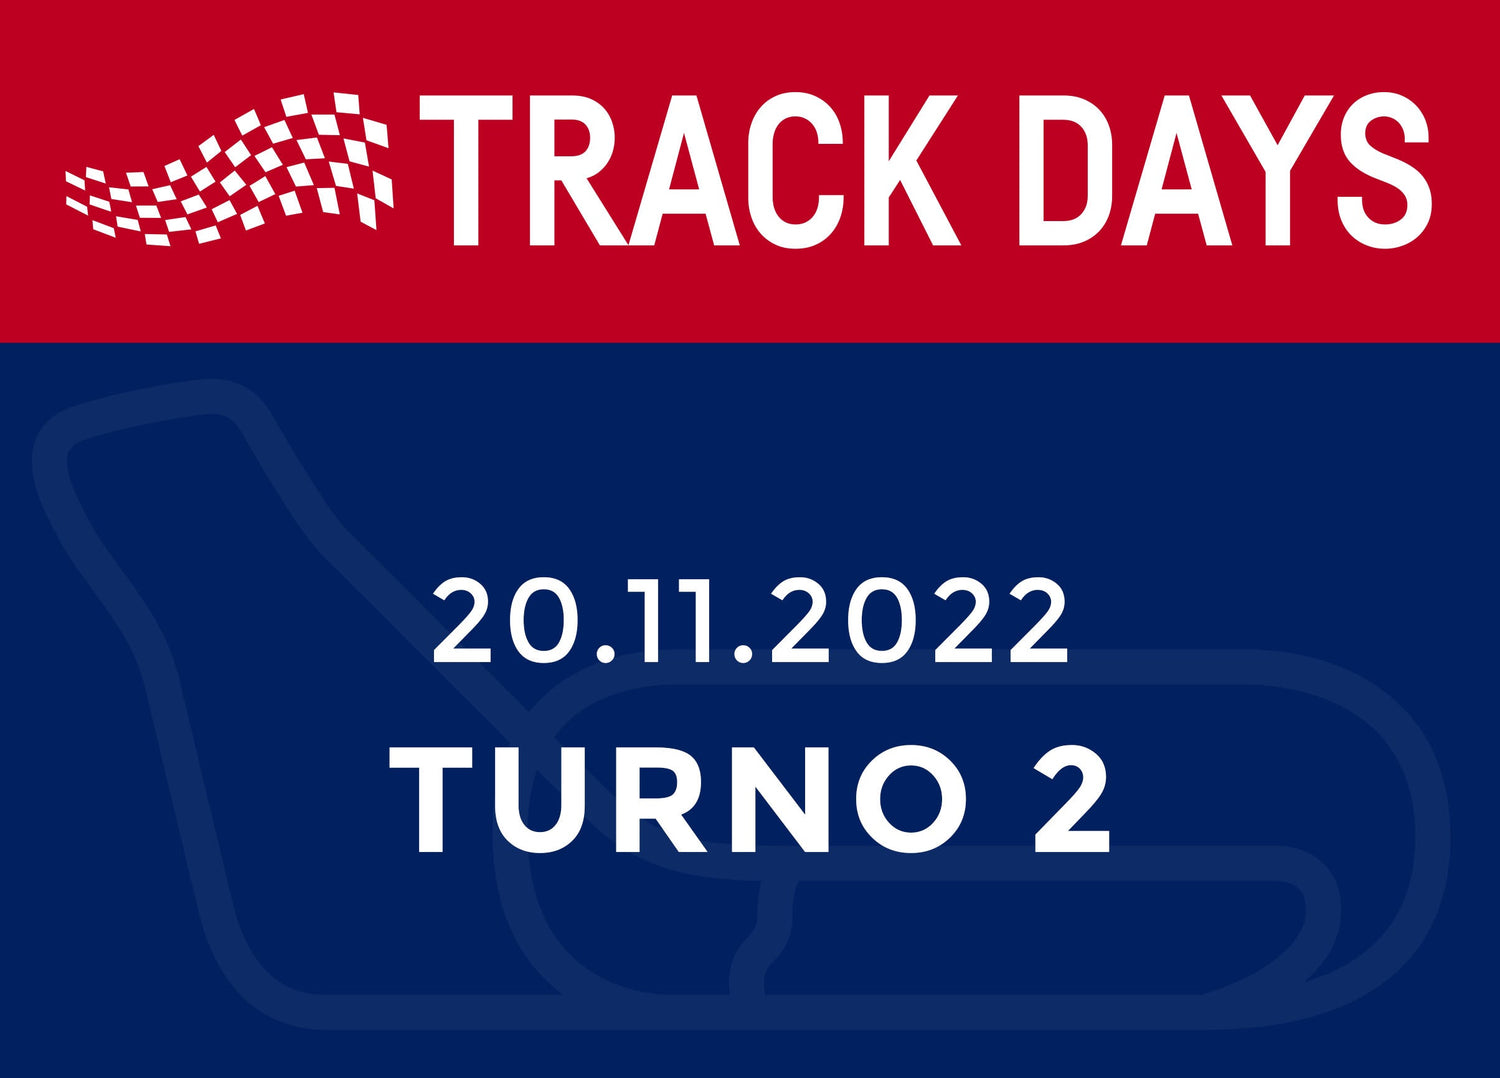 TRACK DAYS 20.11.22 TURNO 2